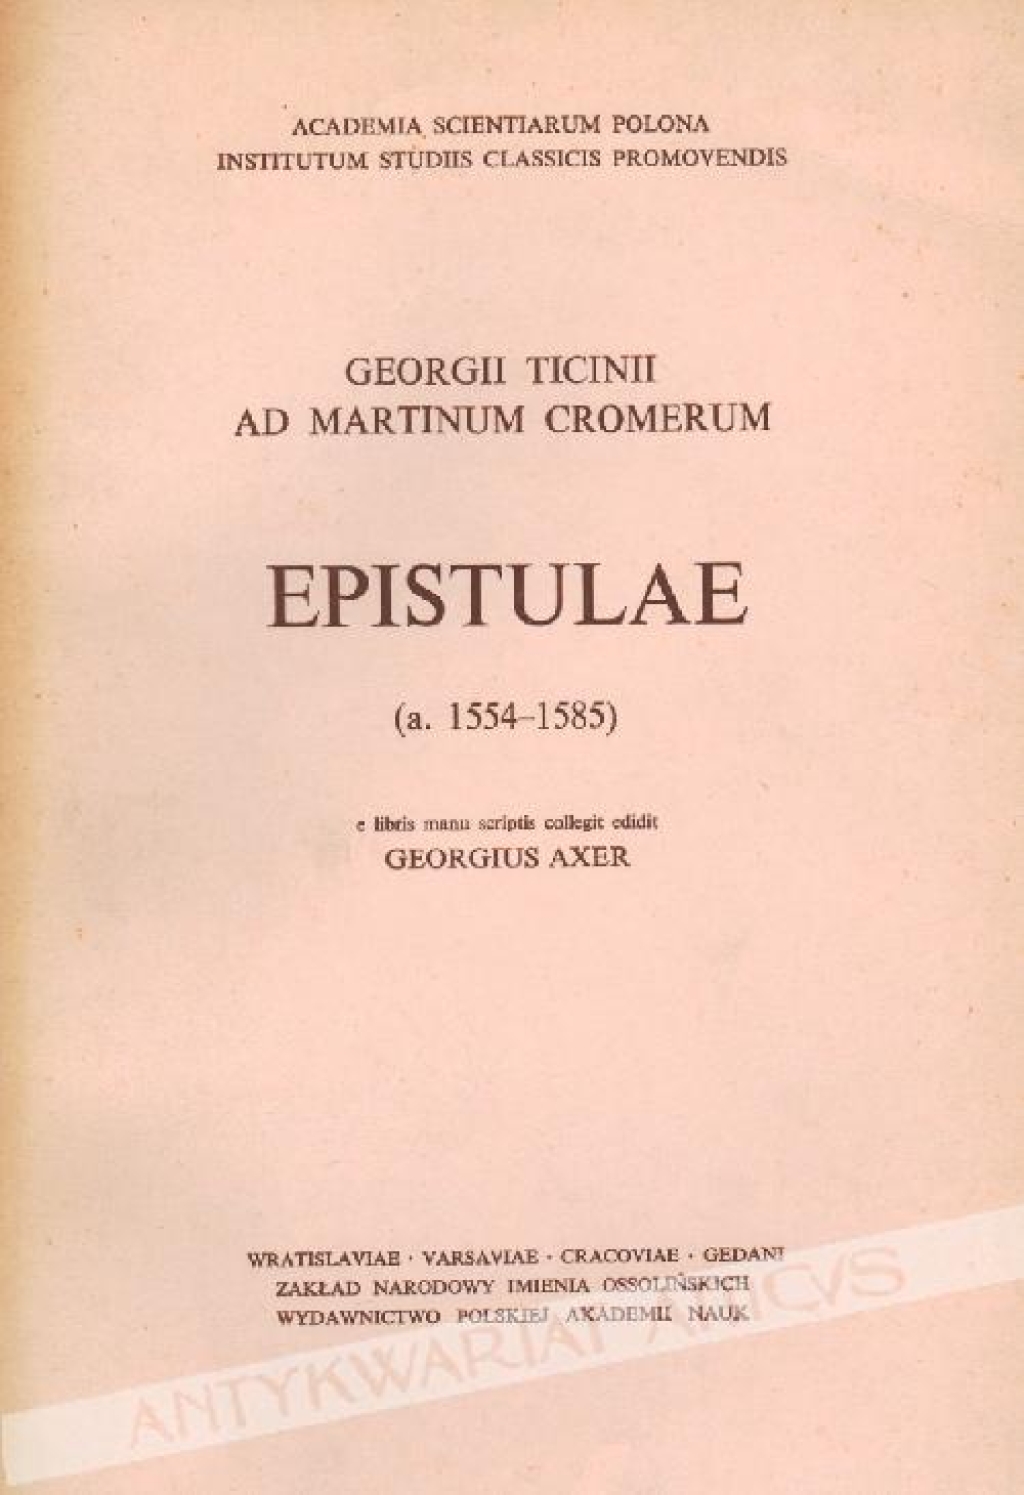 Georgii Ticinii ad Martinum Cromerum. Epistulae (a. 1554-1585)